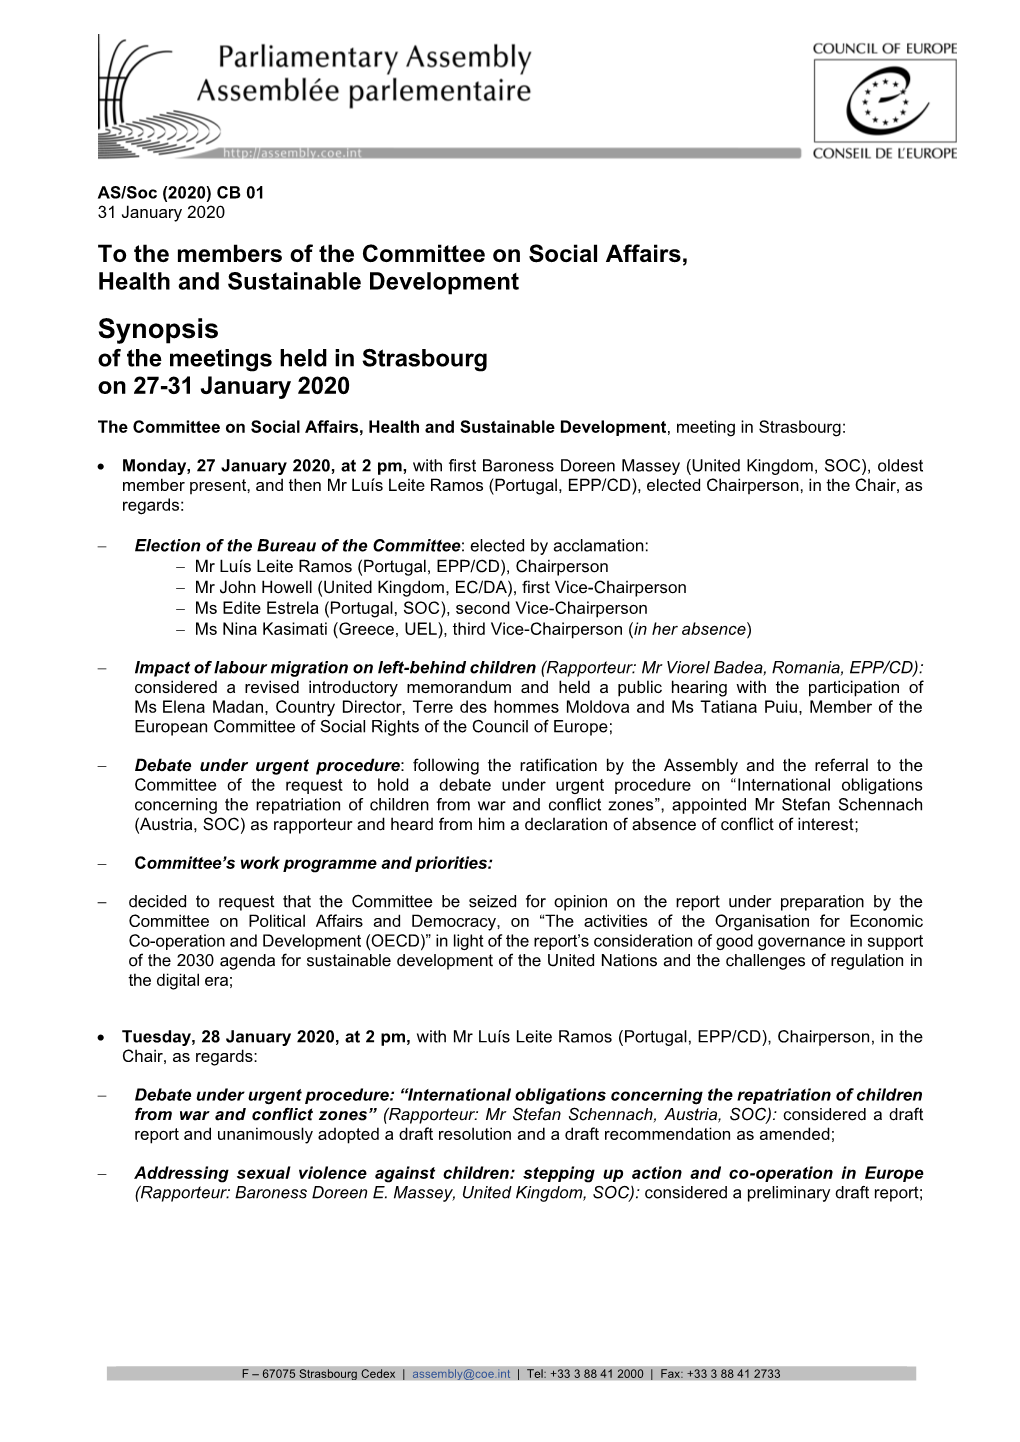 Synopsis of the Meetings Held in Strasbourg on 27-31 January 2020